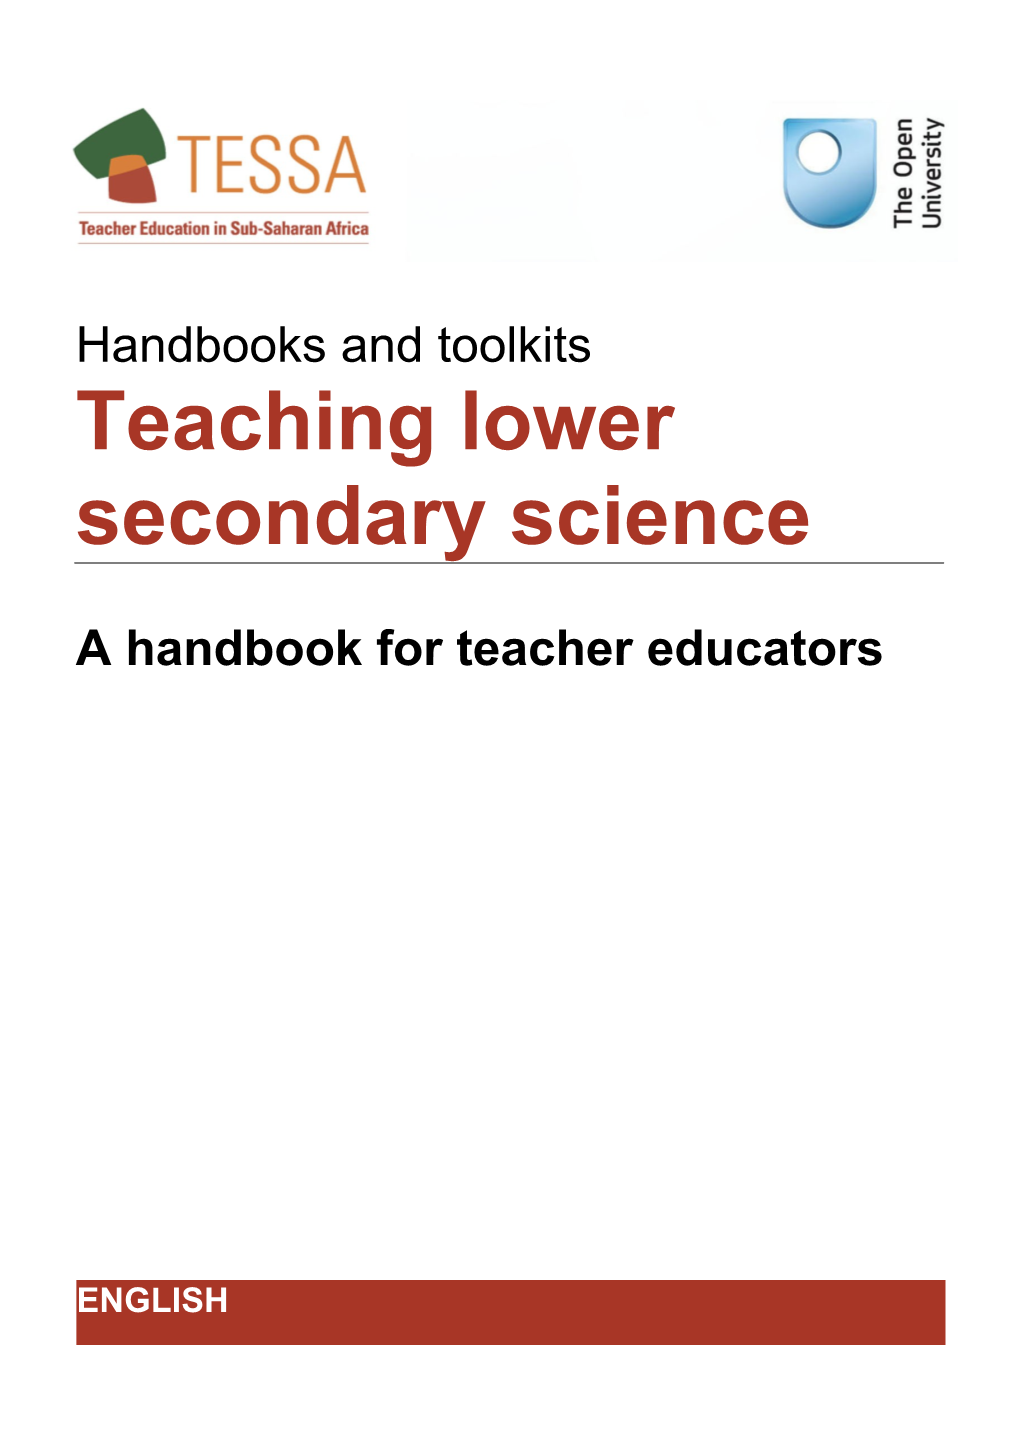 TESSA Teaching Lower Secondary Science a Handbook for Teacher Educators